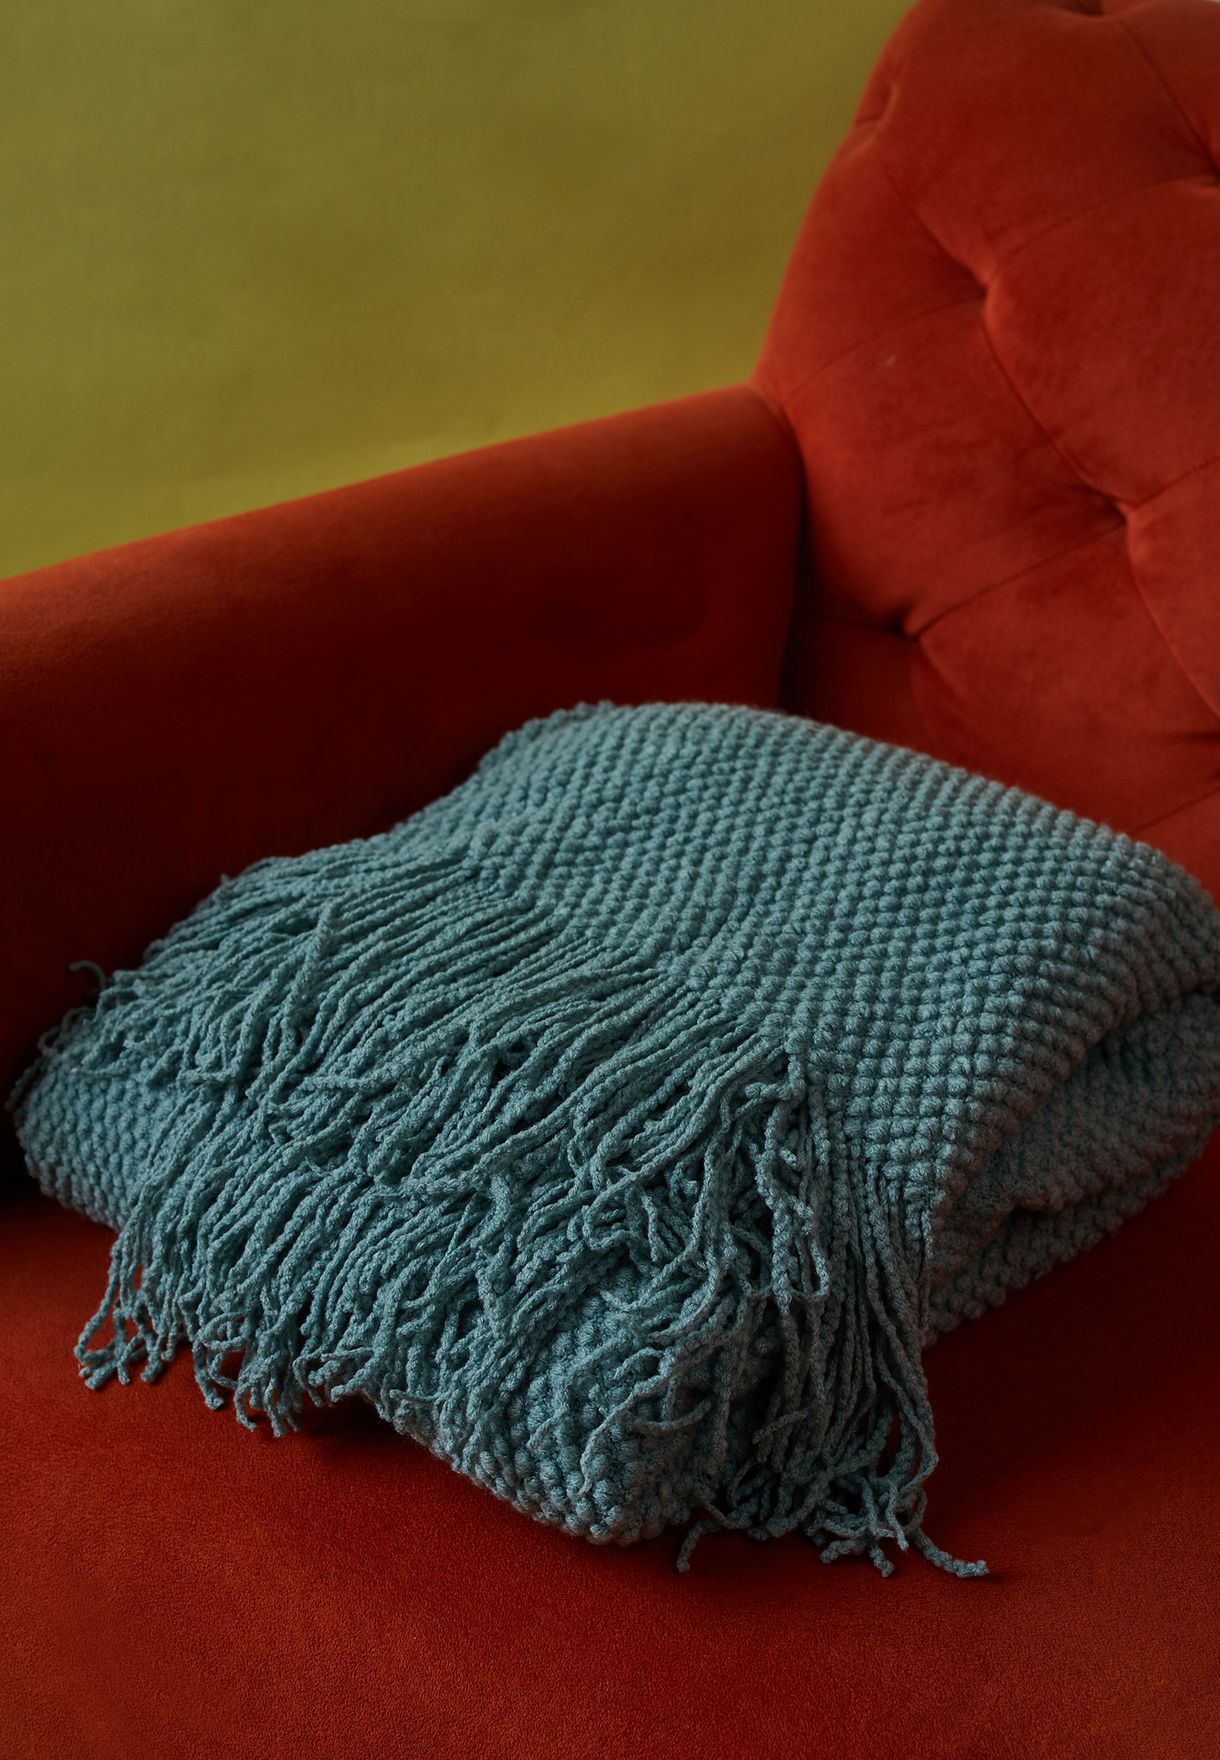 Knitted Blanket 130X200Cm